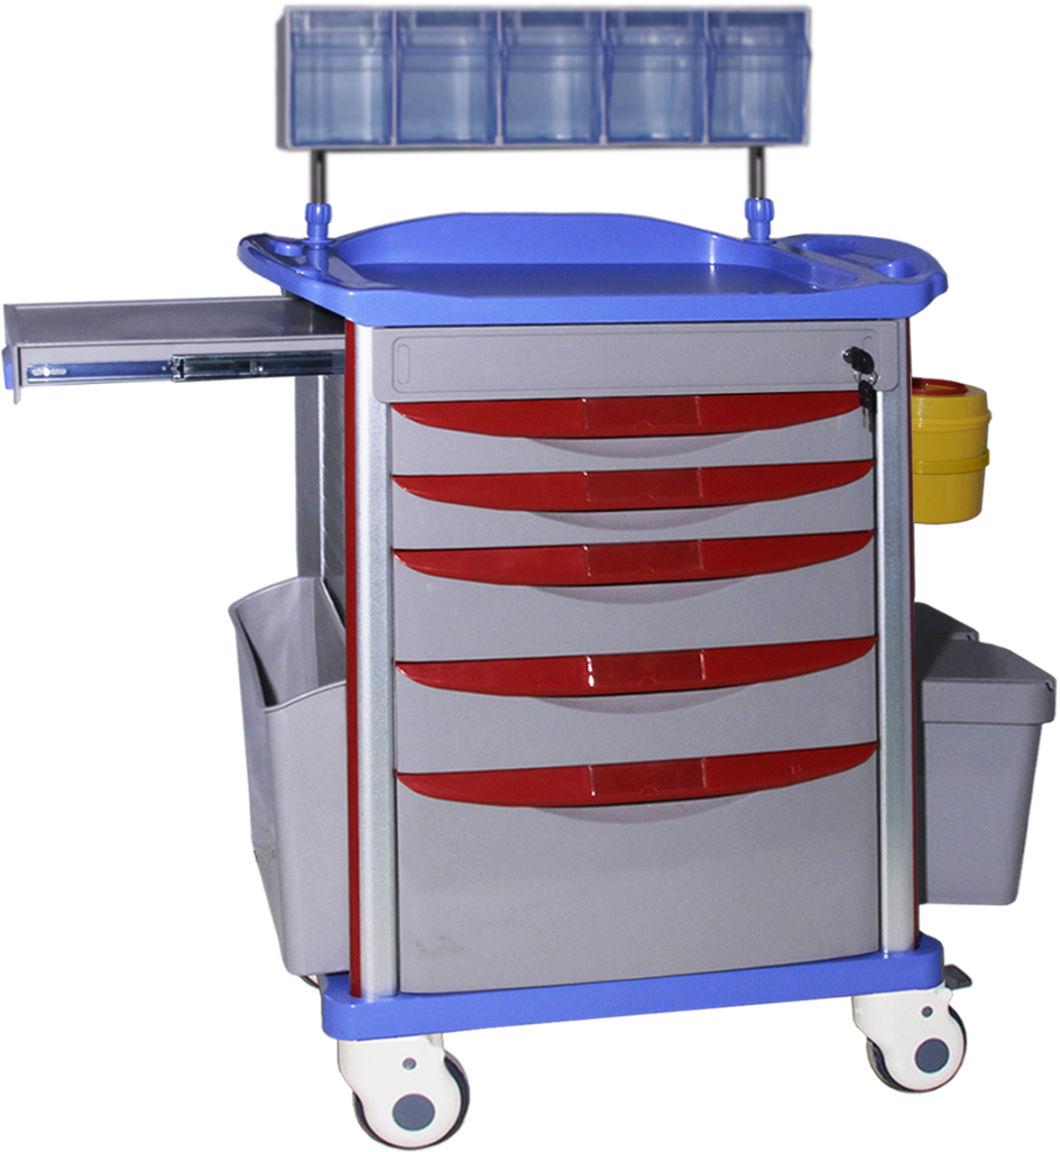 Mn-AC003 Drug Emergency Cart Hospital Medical Treatment Trolley with Drawers Wheels